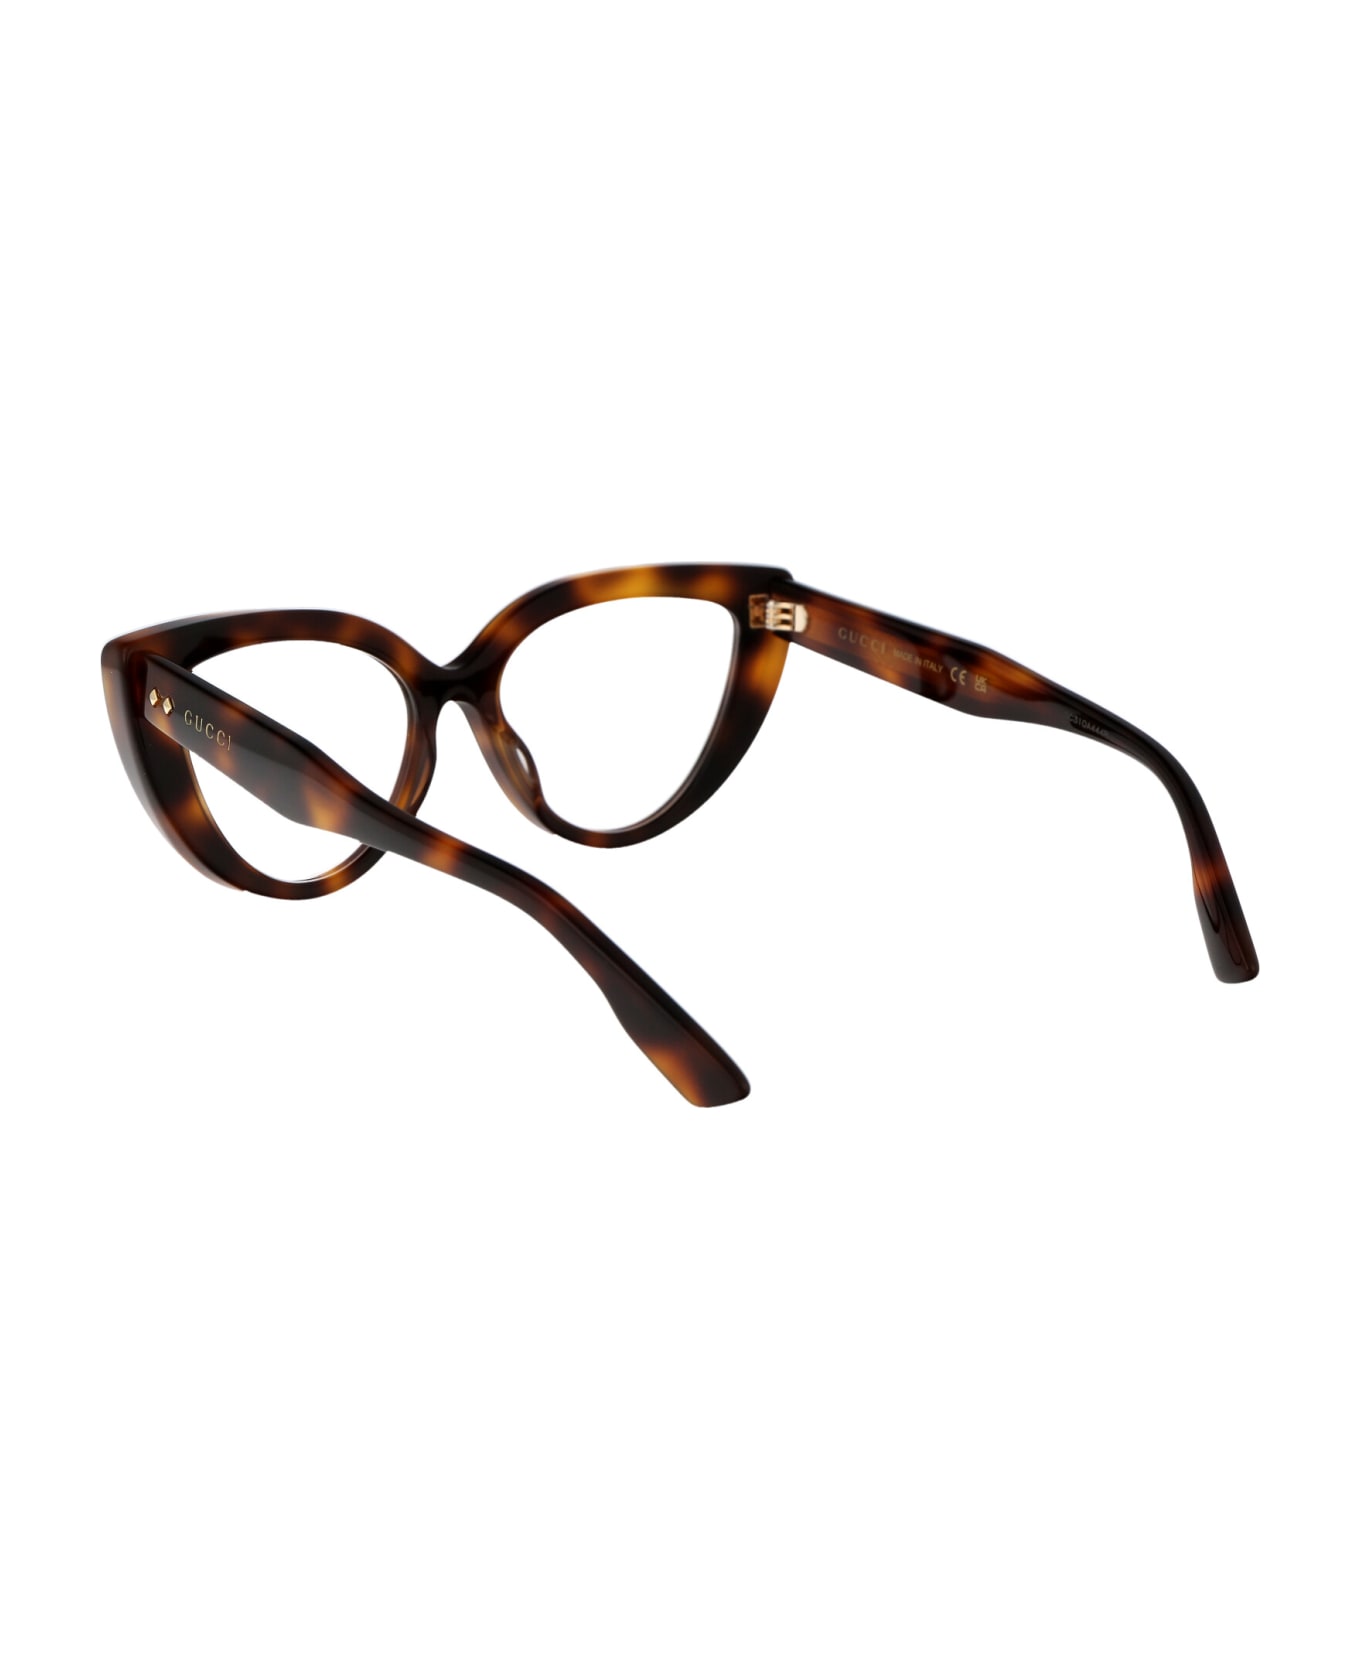 Gucci Eyewear Gg1530o Glasses - 002 HAVANA HAVANA TRANSPARENT